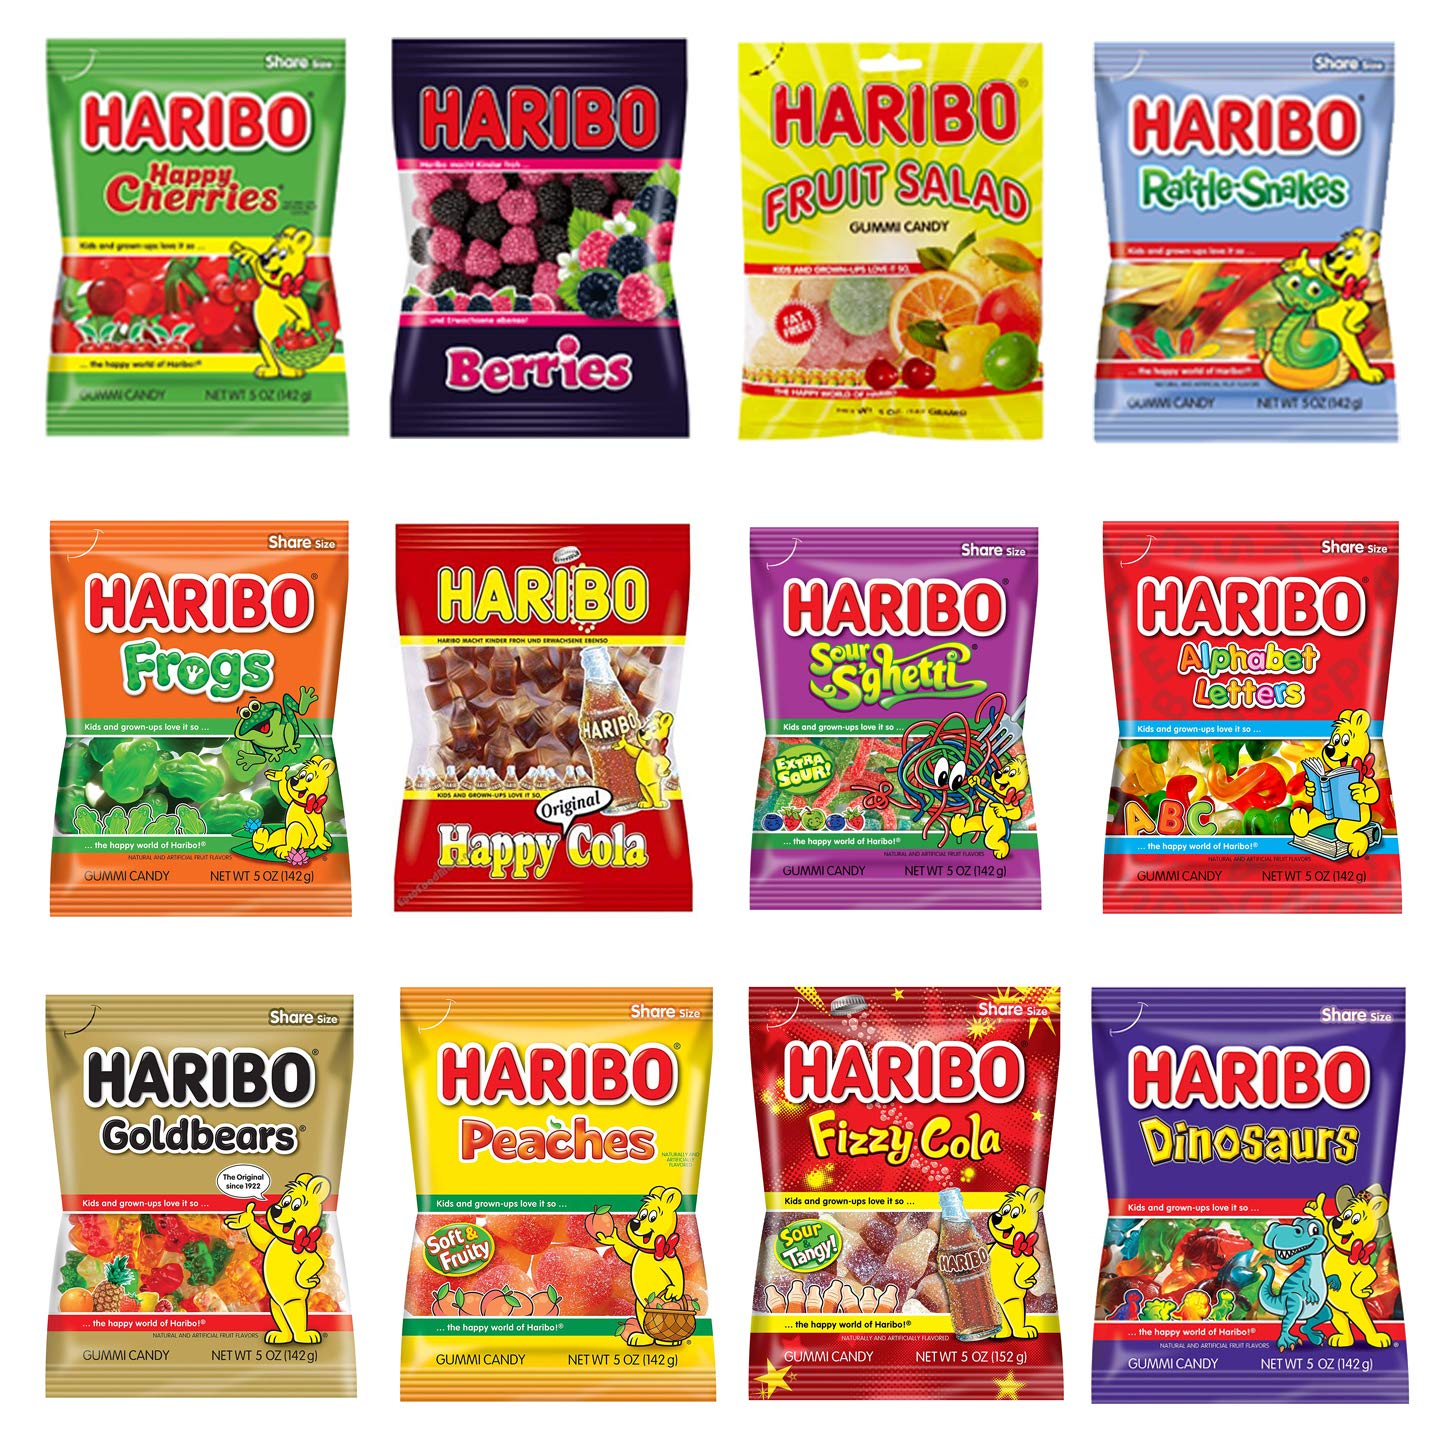 Buy Haribo Candies in Canada